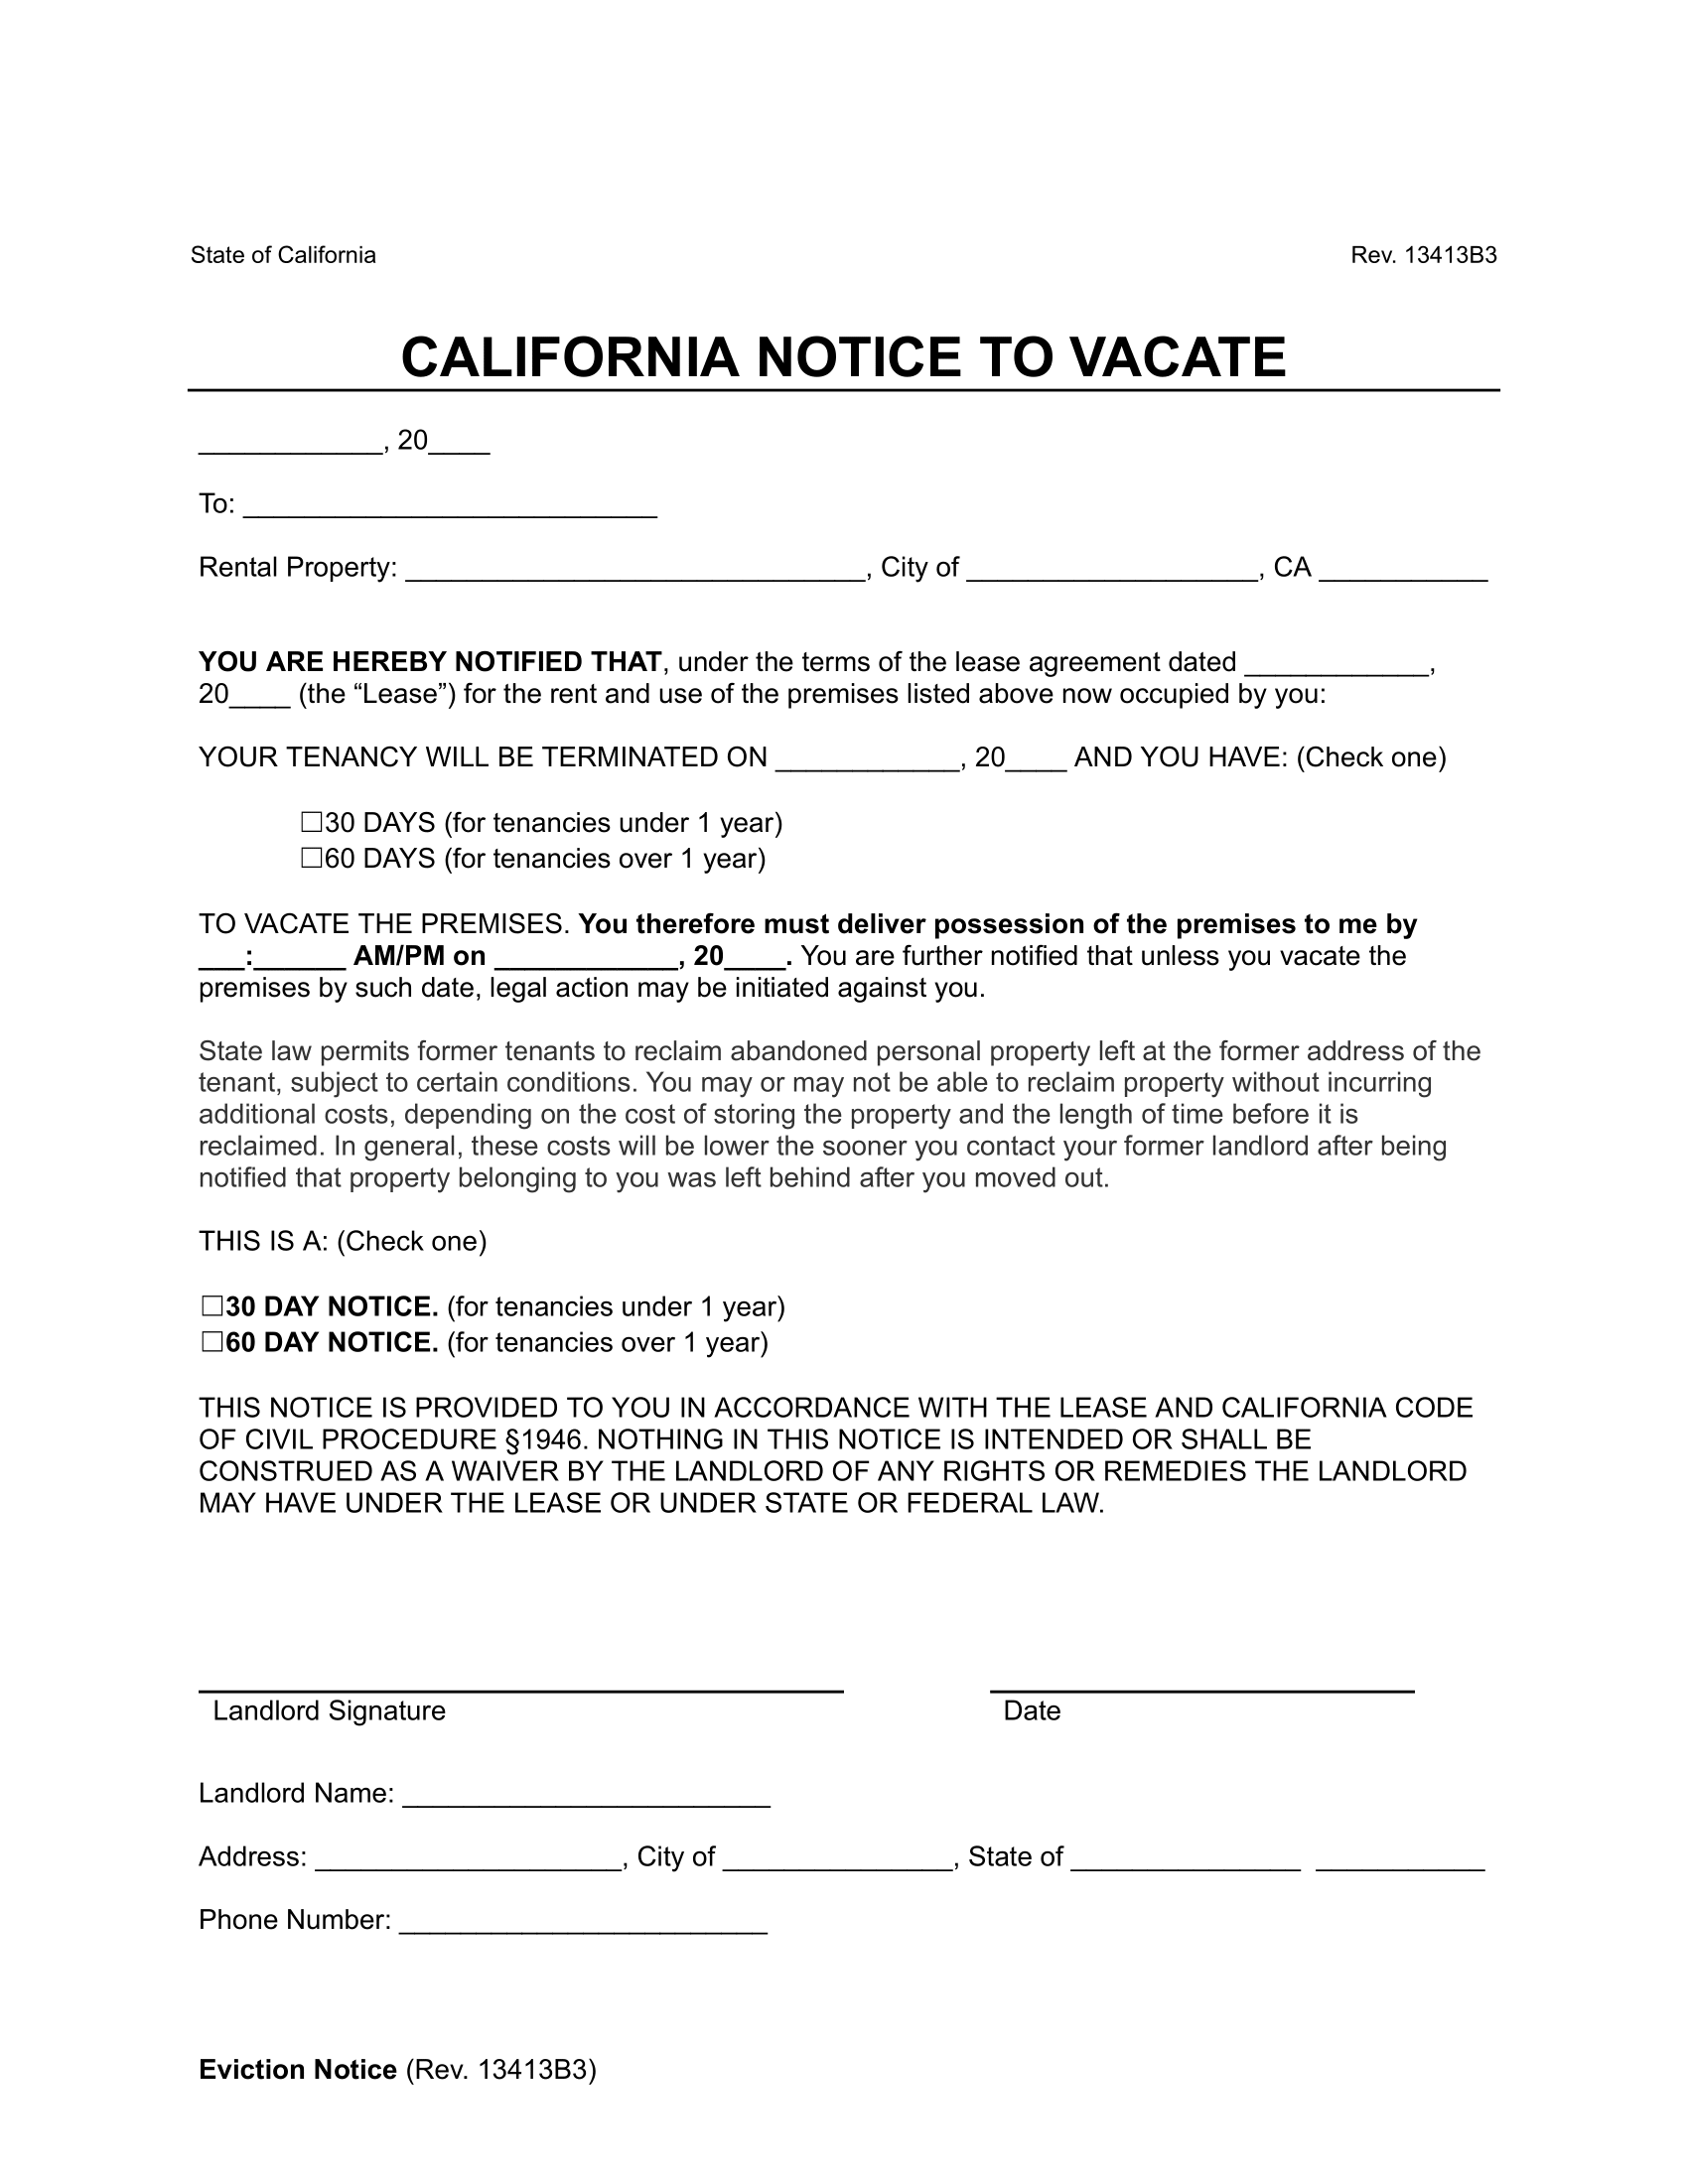 California Notice to Vacate